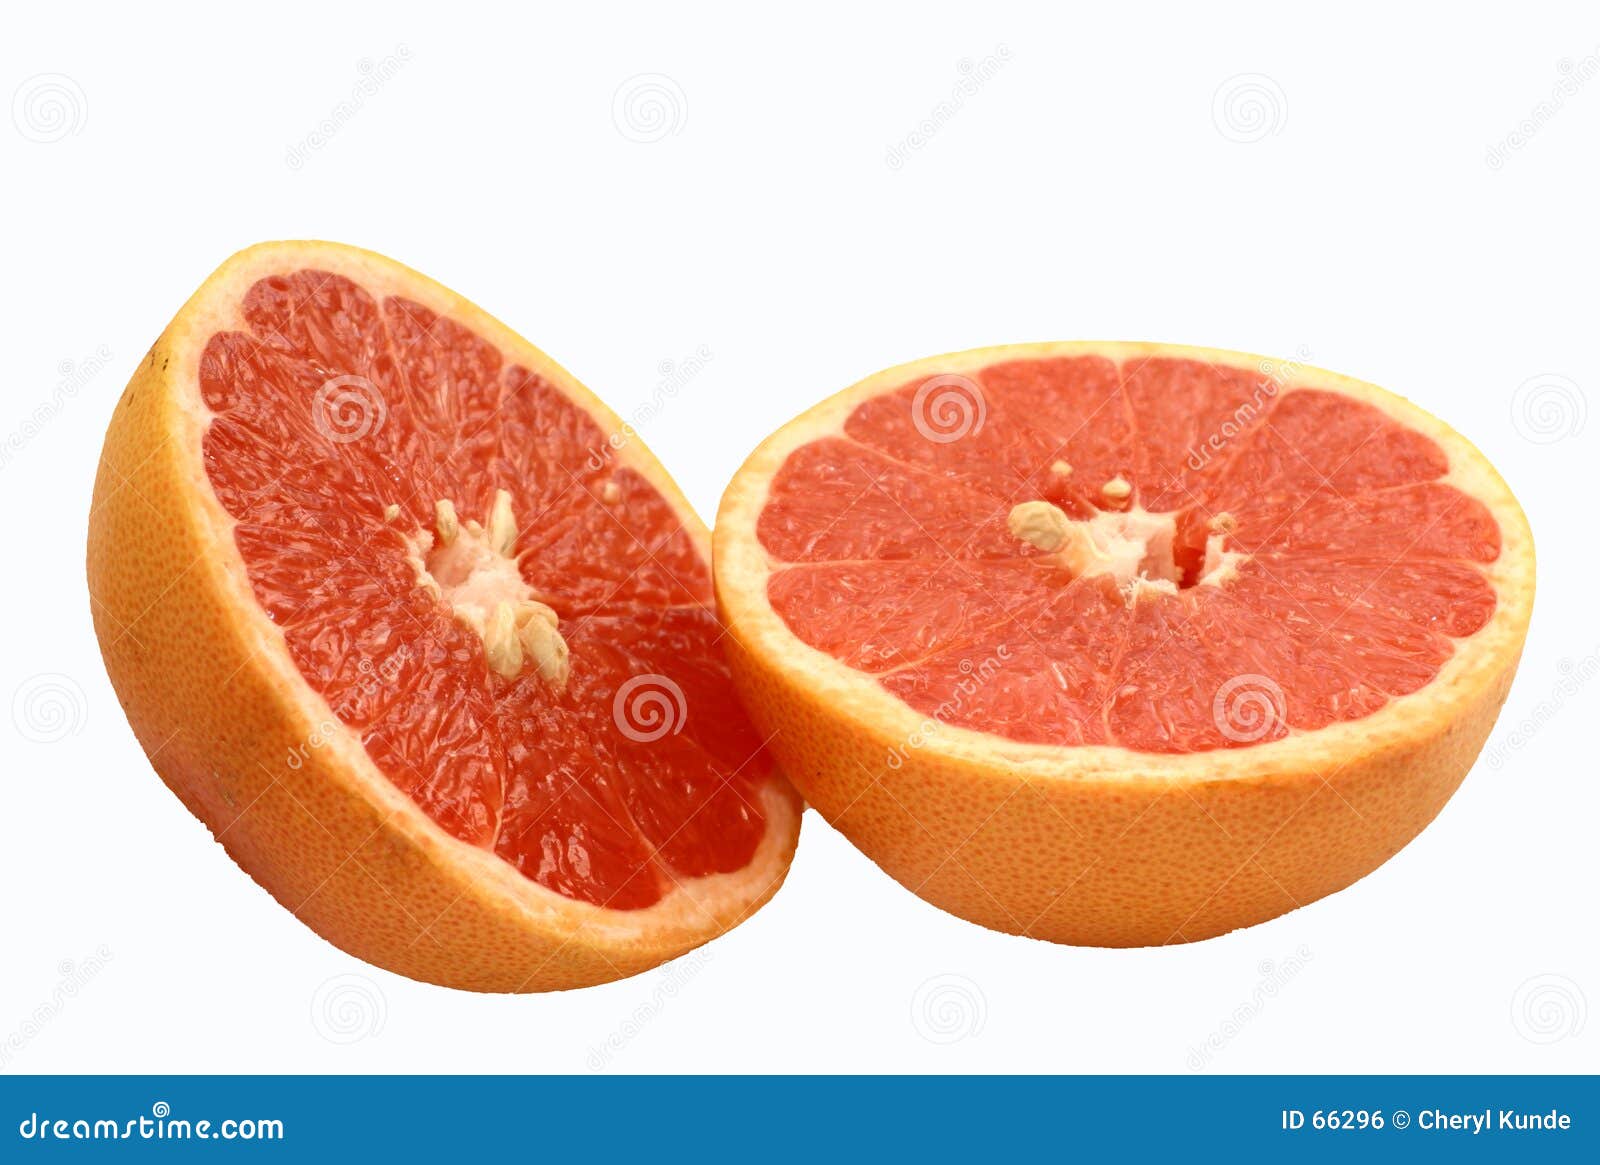 pink grapefruit halves